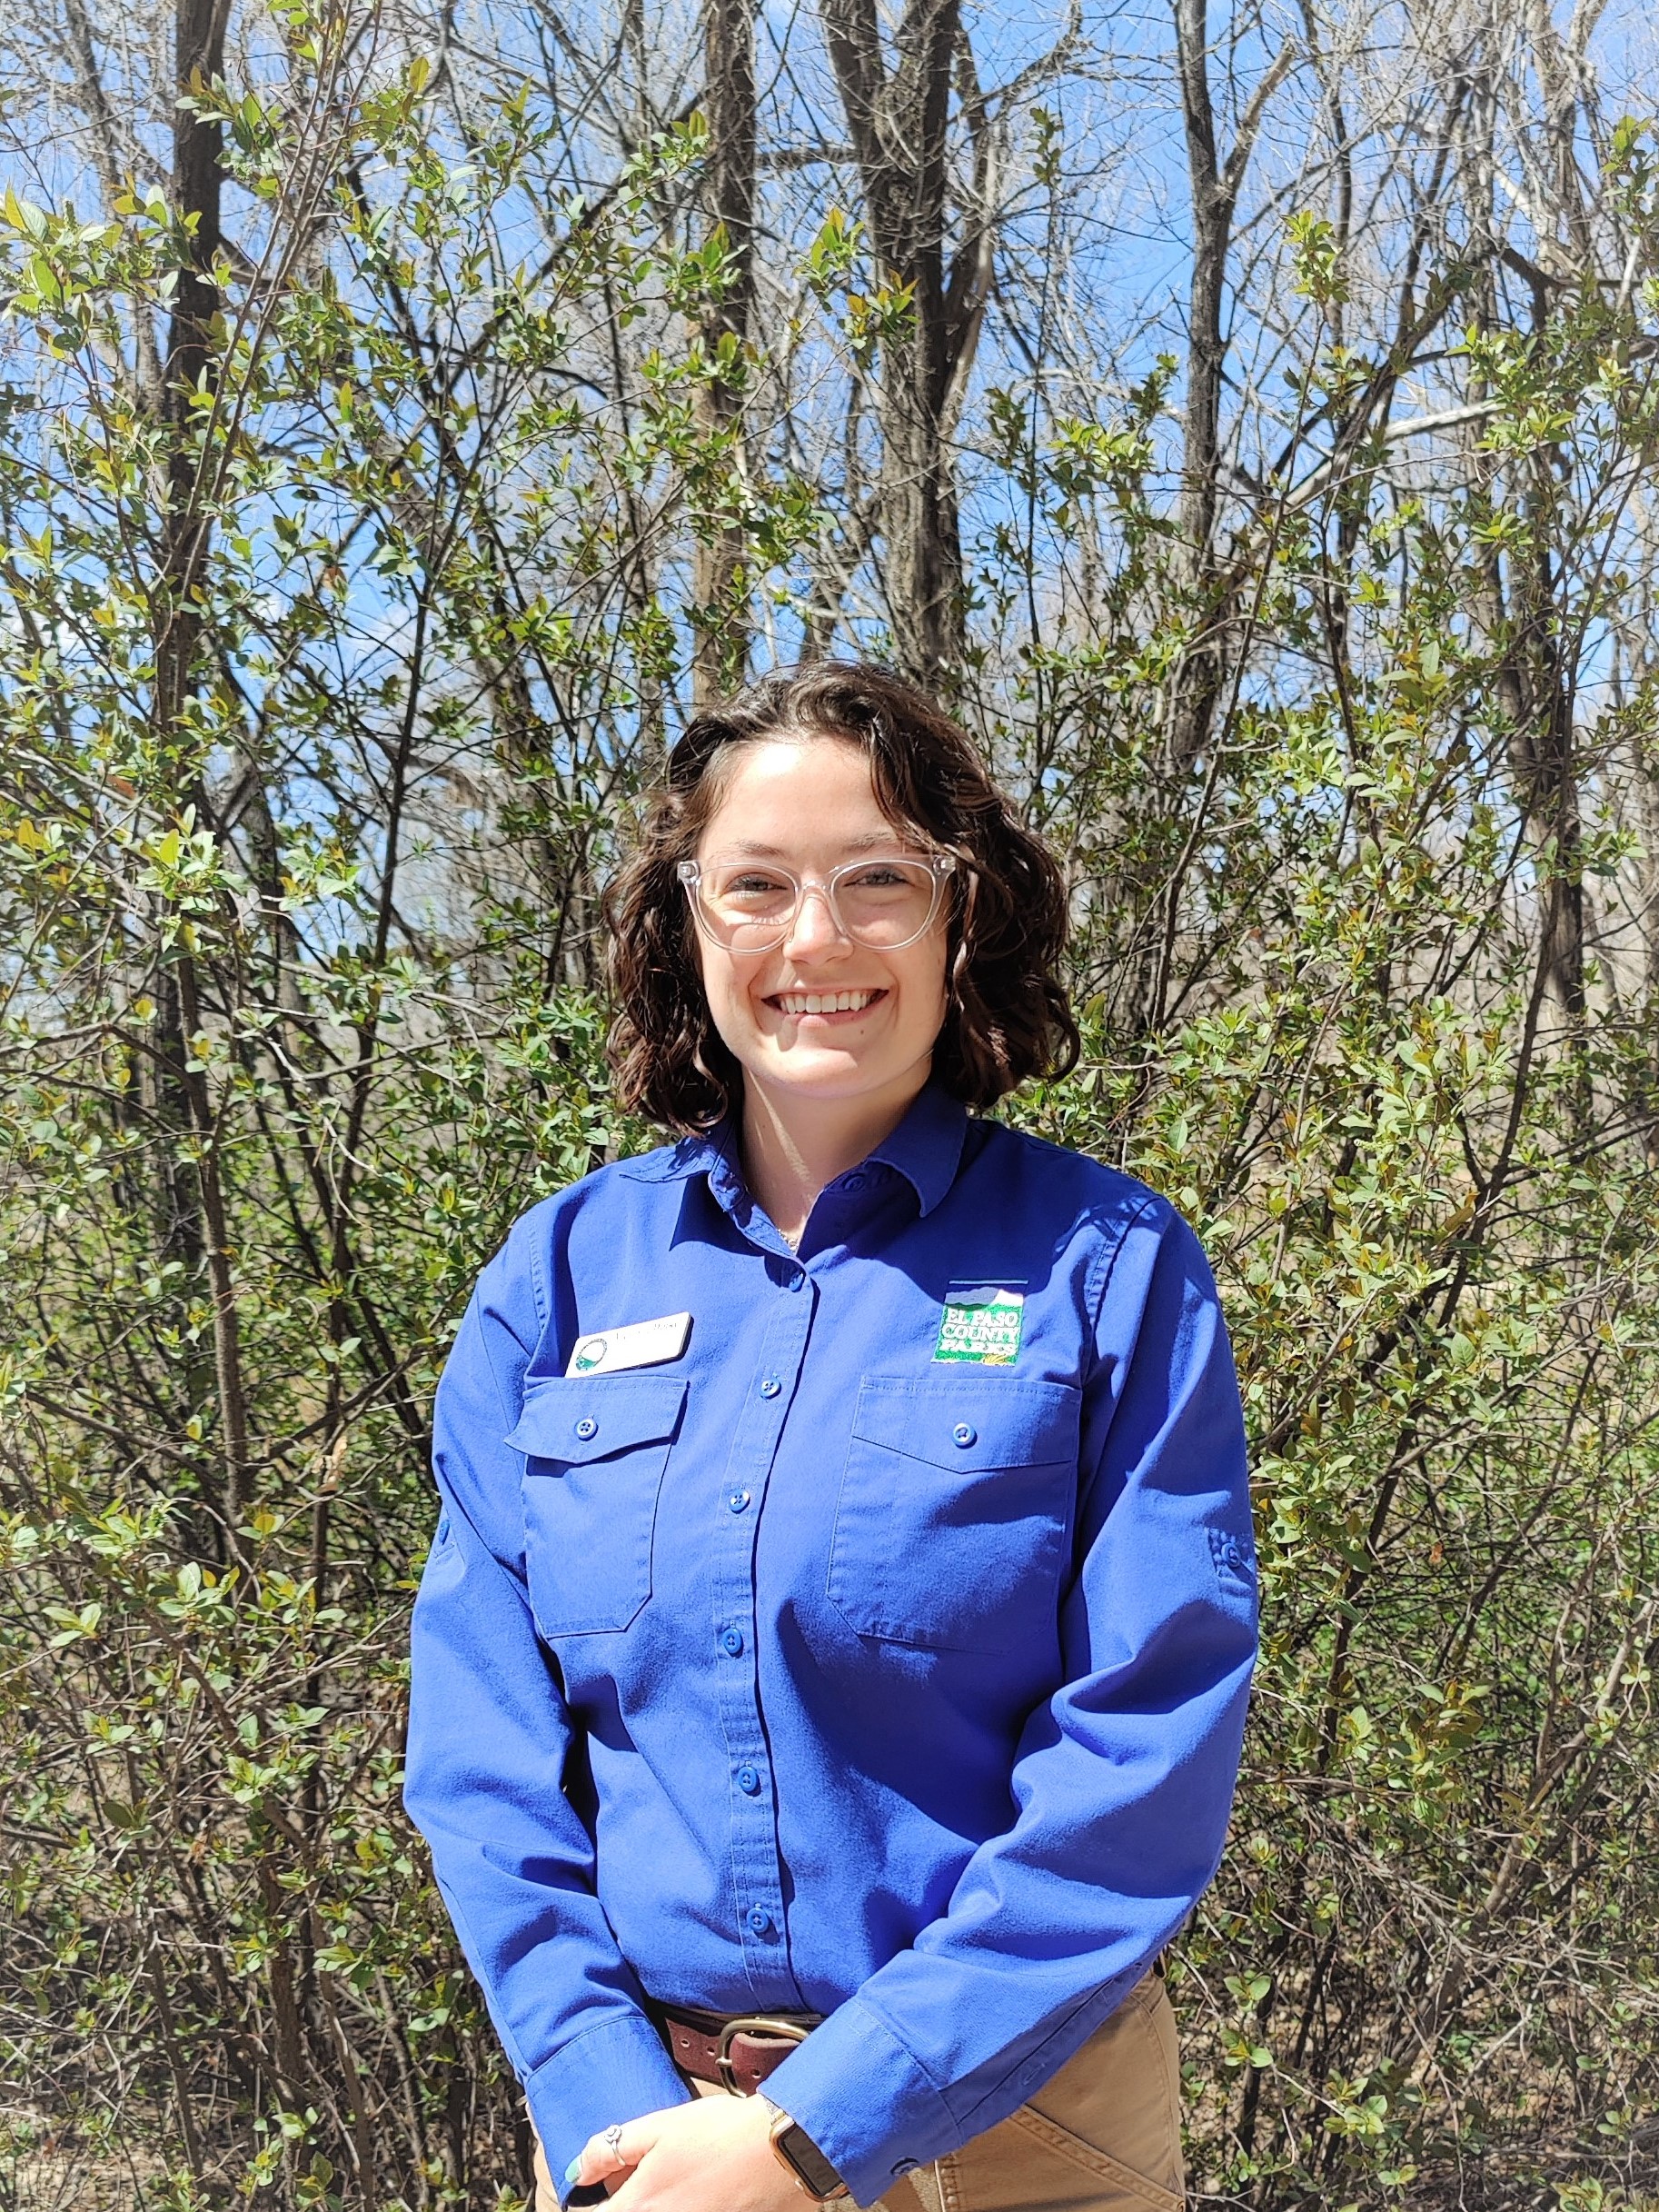 Image of Fountain Creek Nature Center's Interpretive Program Coordinator Victoria Dinkel standing in an outdoor setting